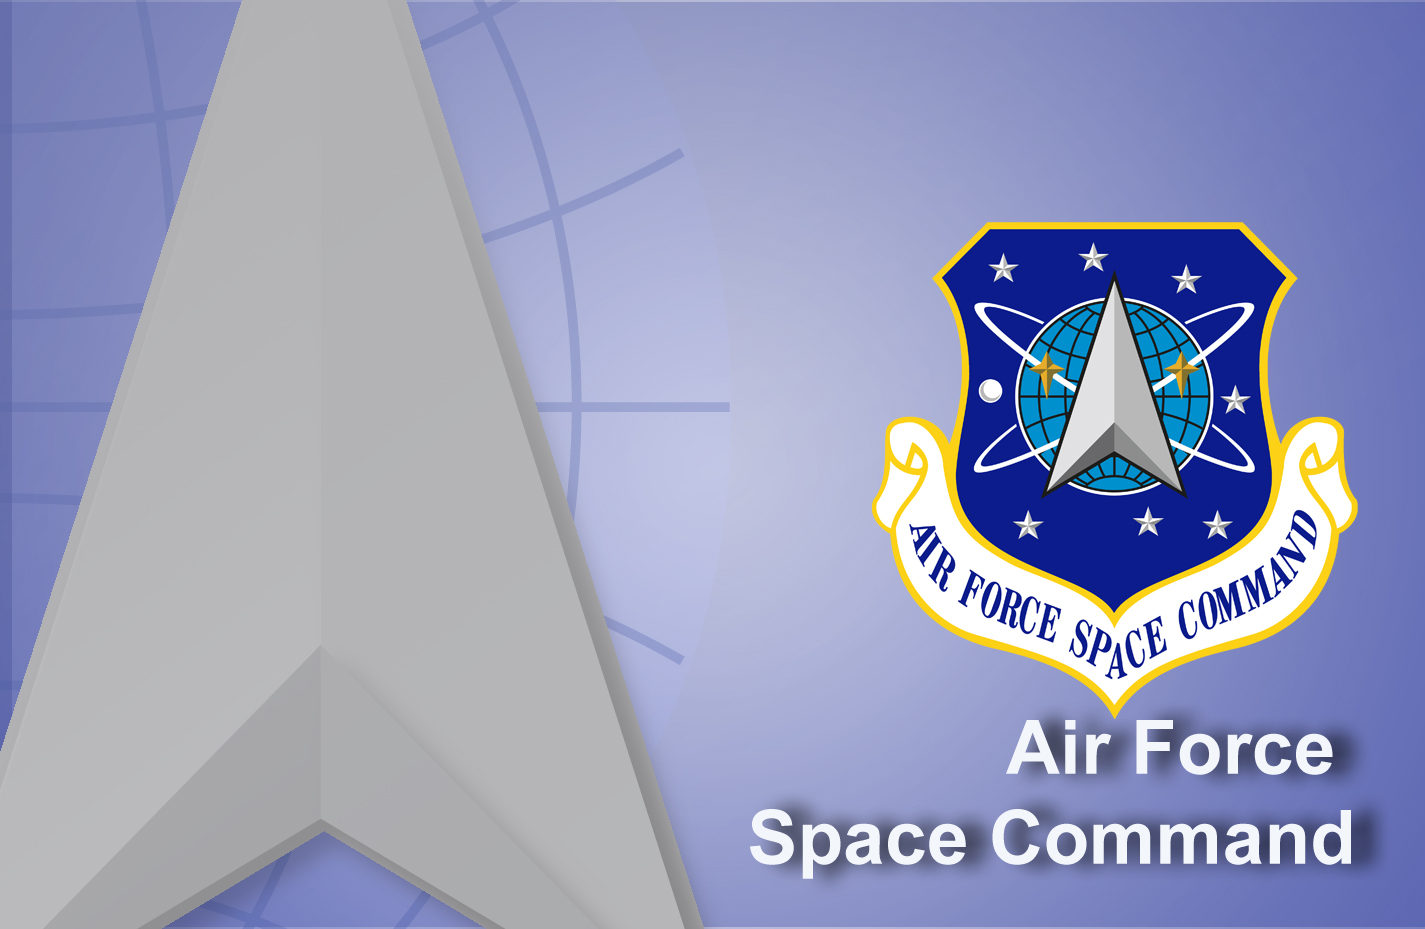 Air Force Space Command > Air Force Space Command > Display1425 x 929